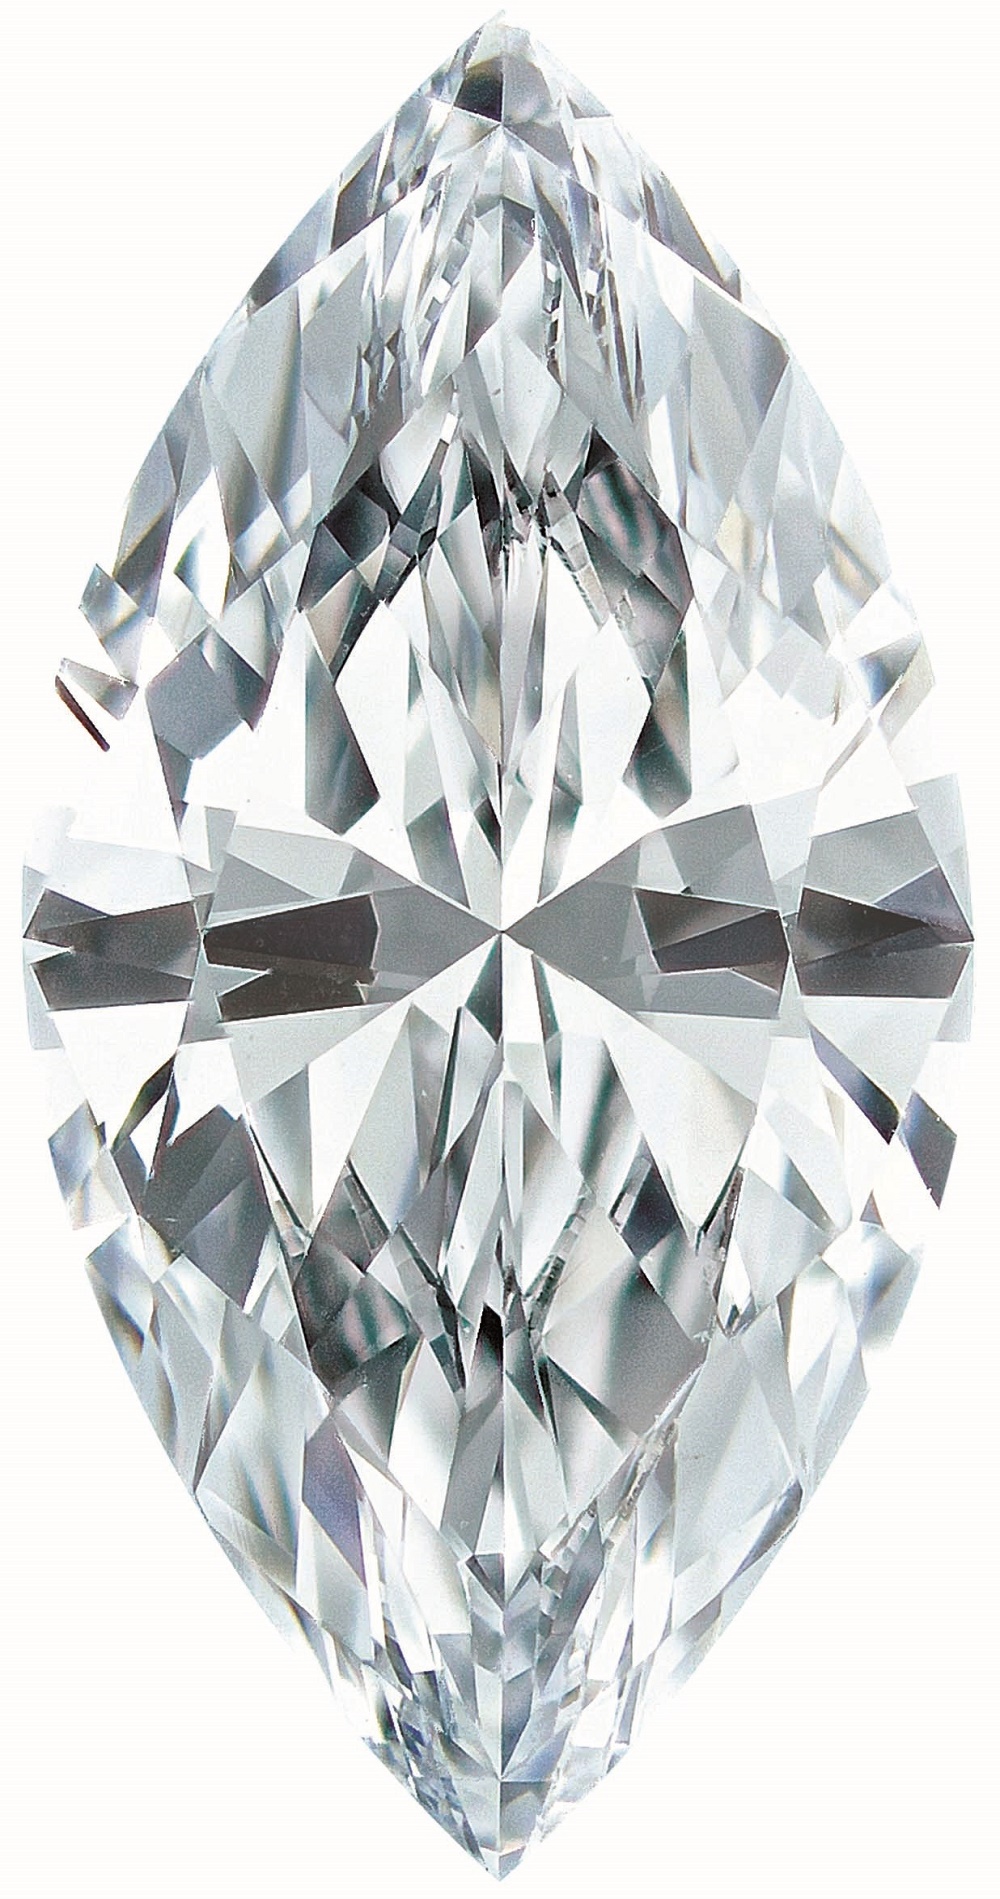 Marquise Lab-Grown Diamond